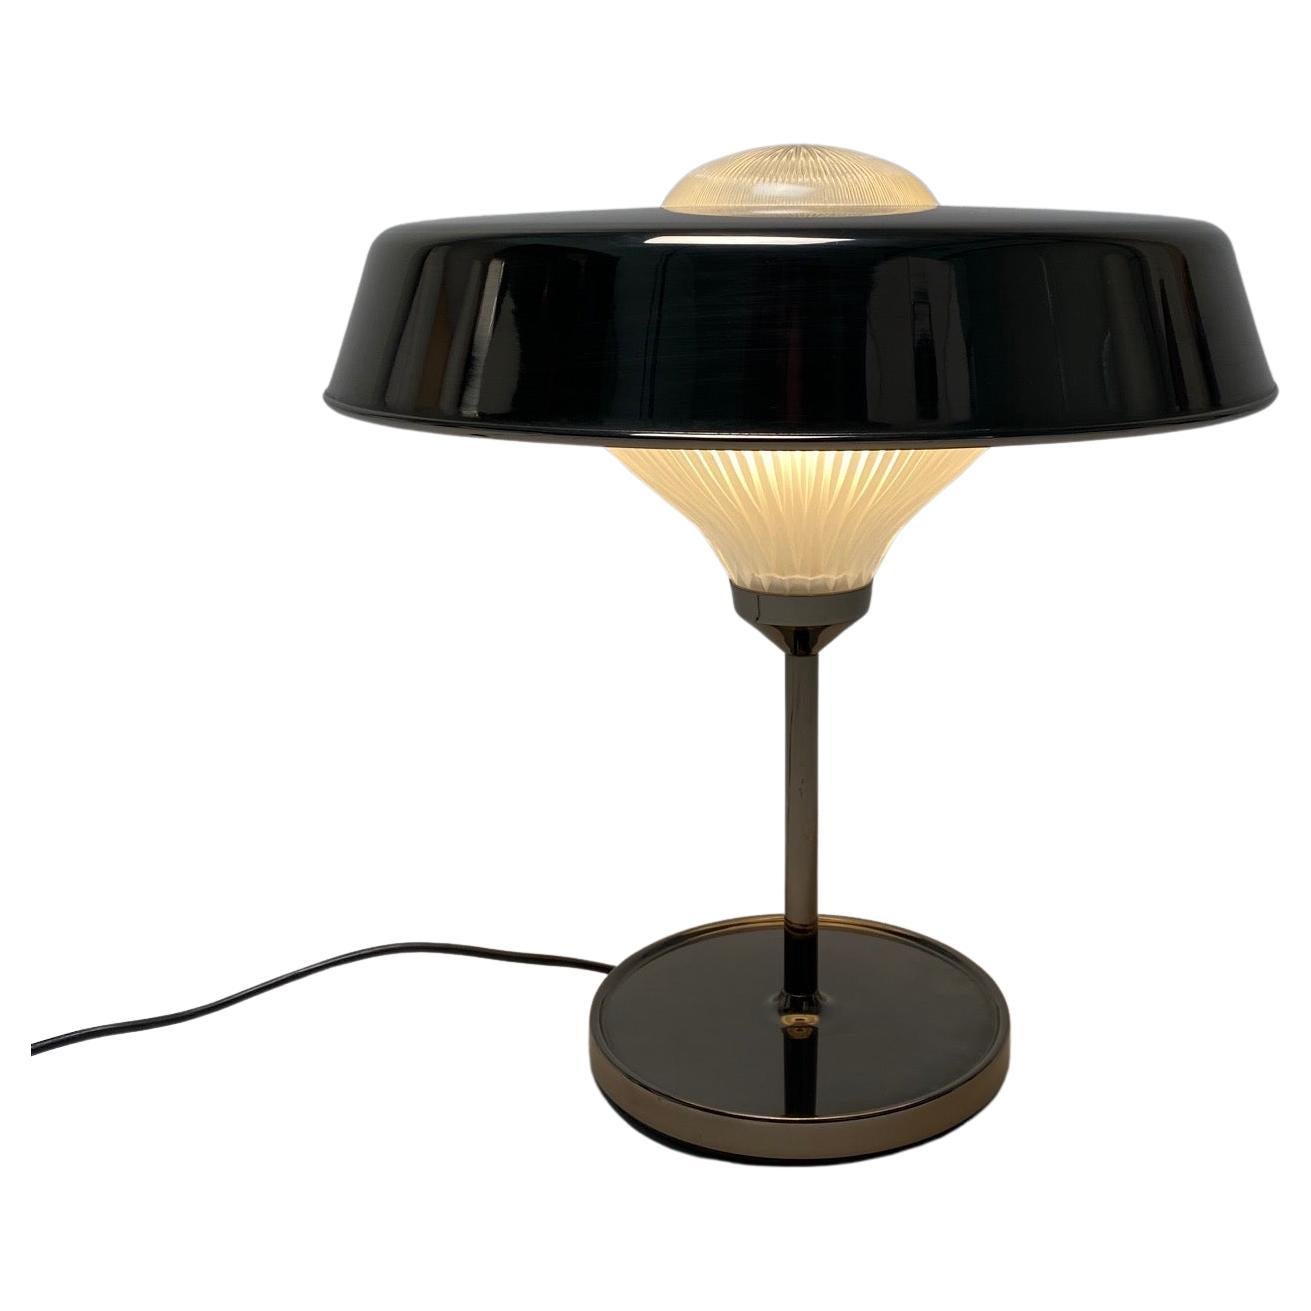 Studio BBPR "Ro" Table Lamp, Artemide, Italy, 1960s For Sale